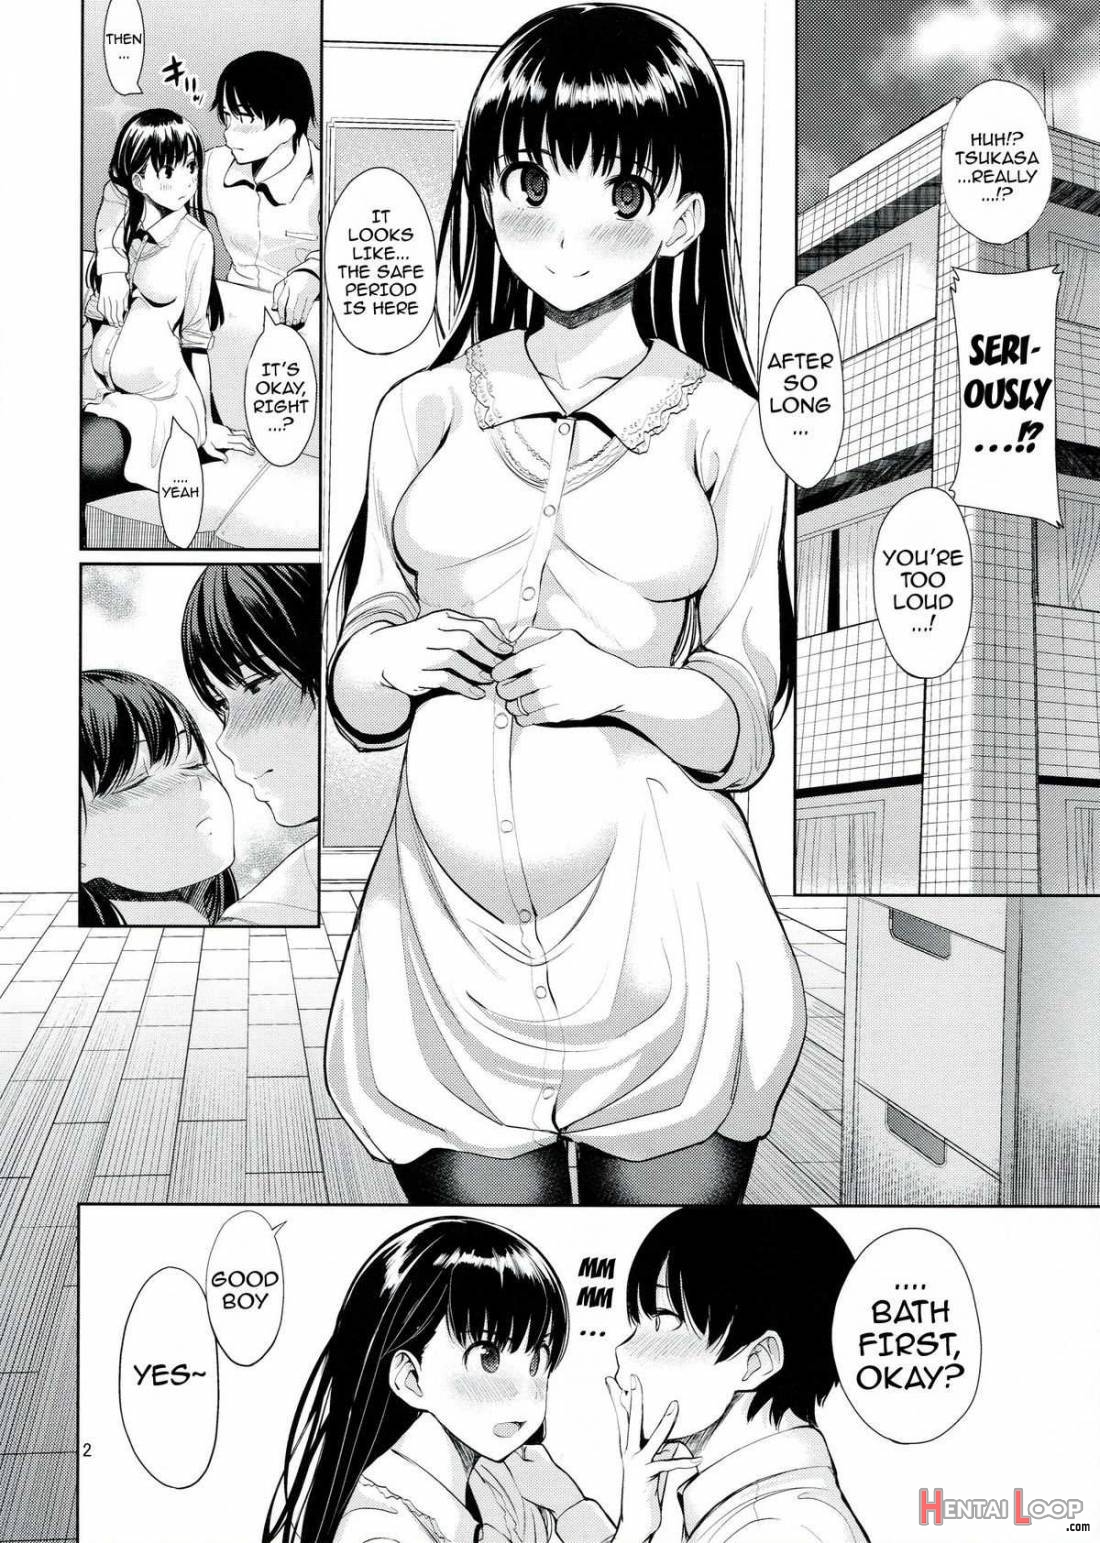 Koufuku no Conception page 3